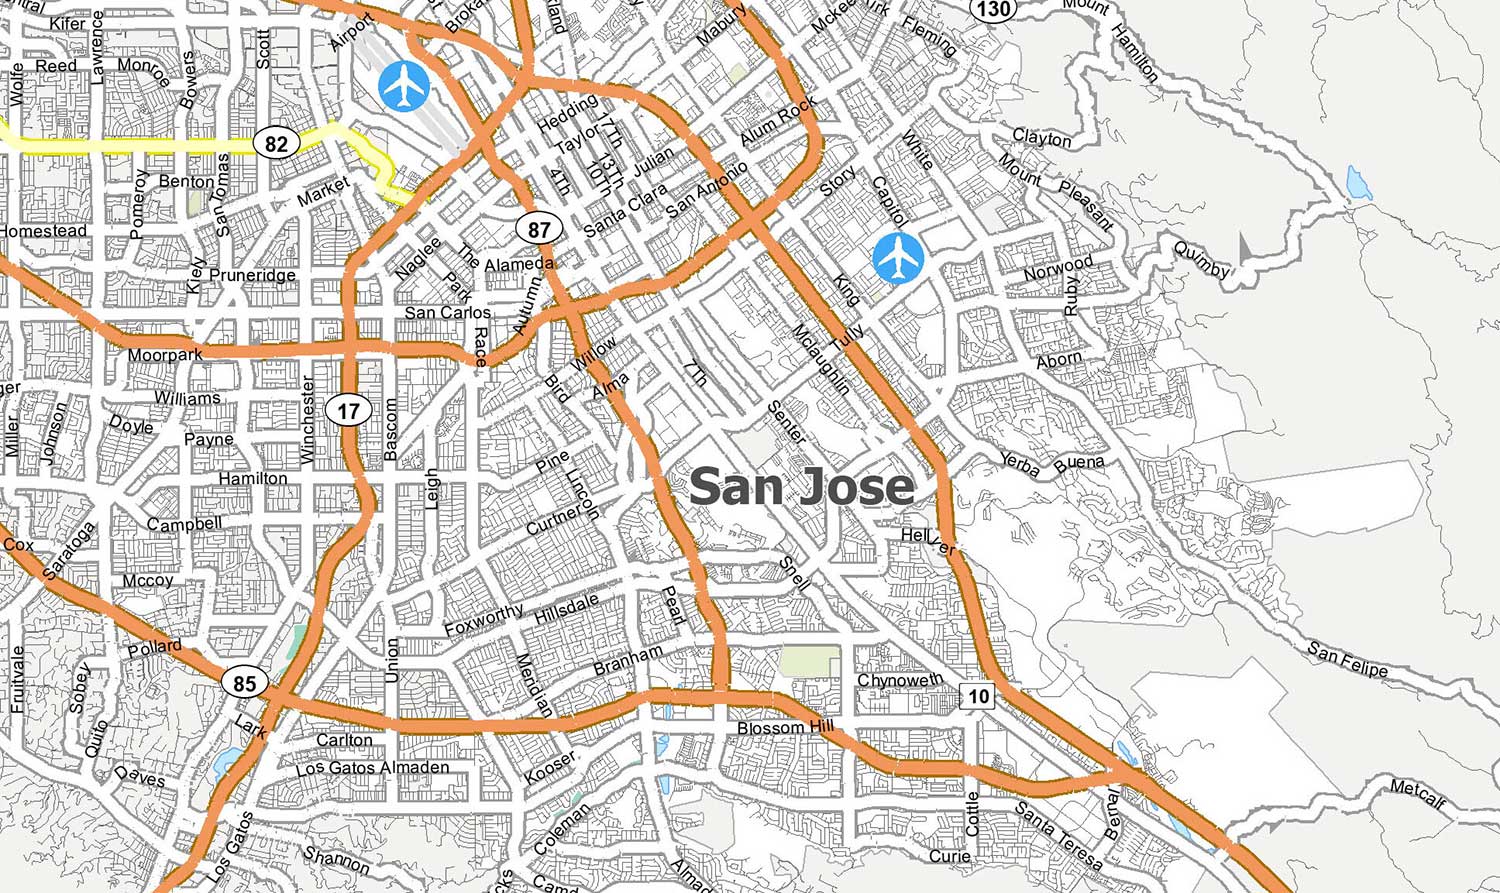 Map of San Jose, California - GIS Geography.